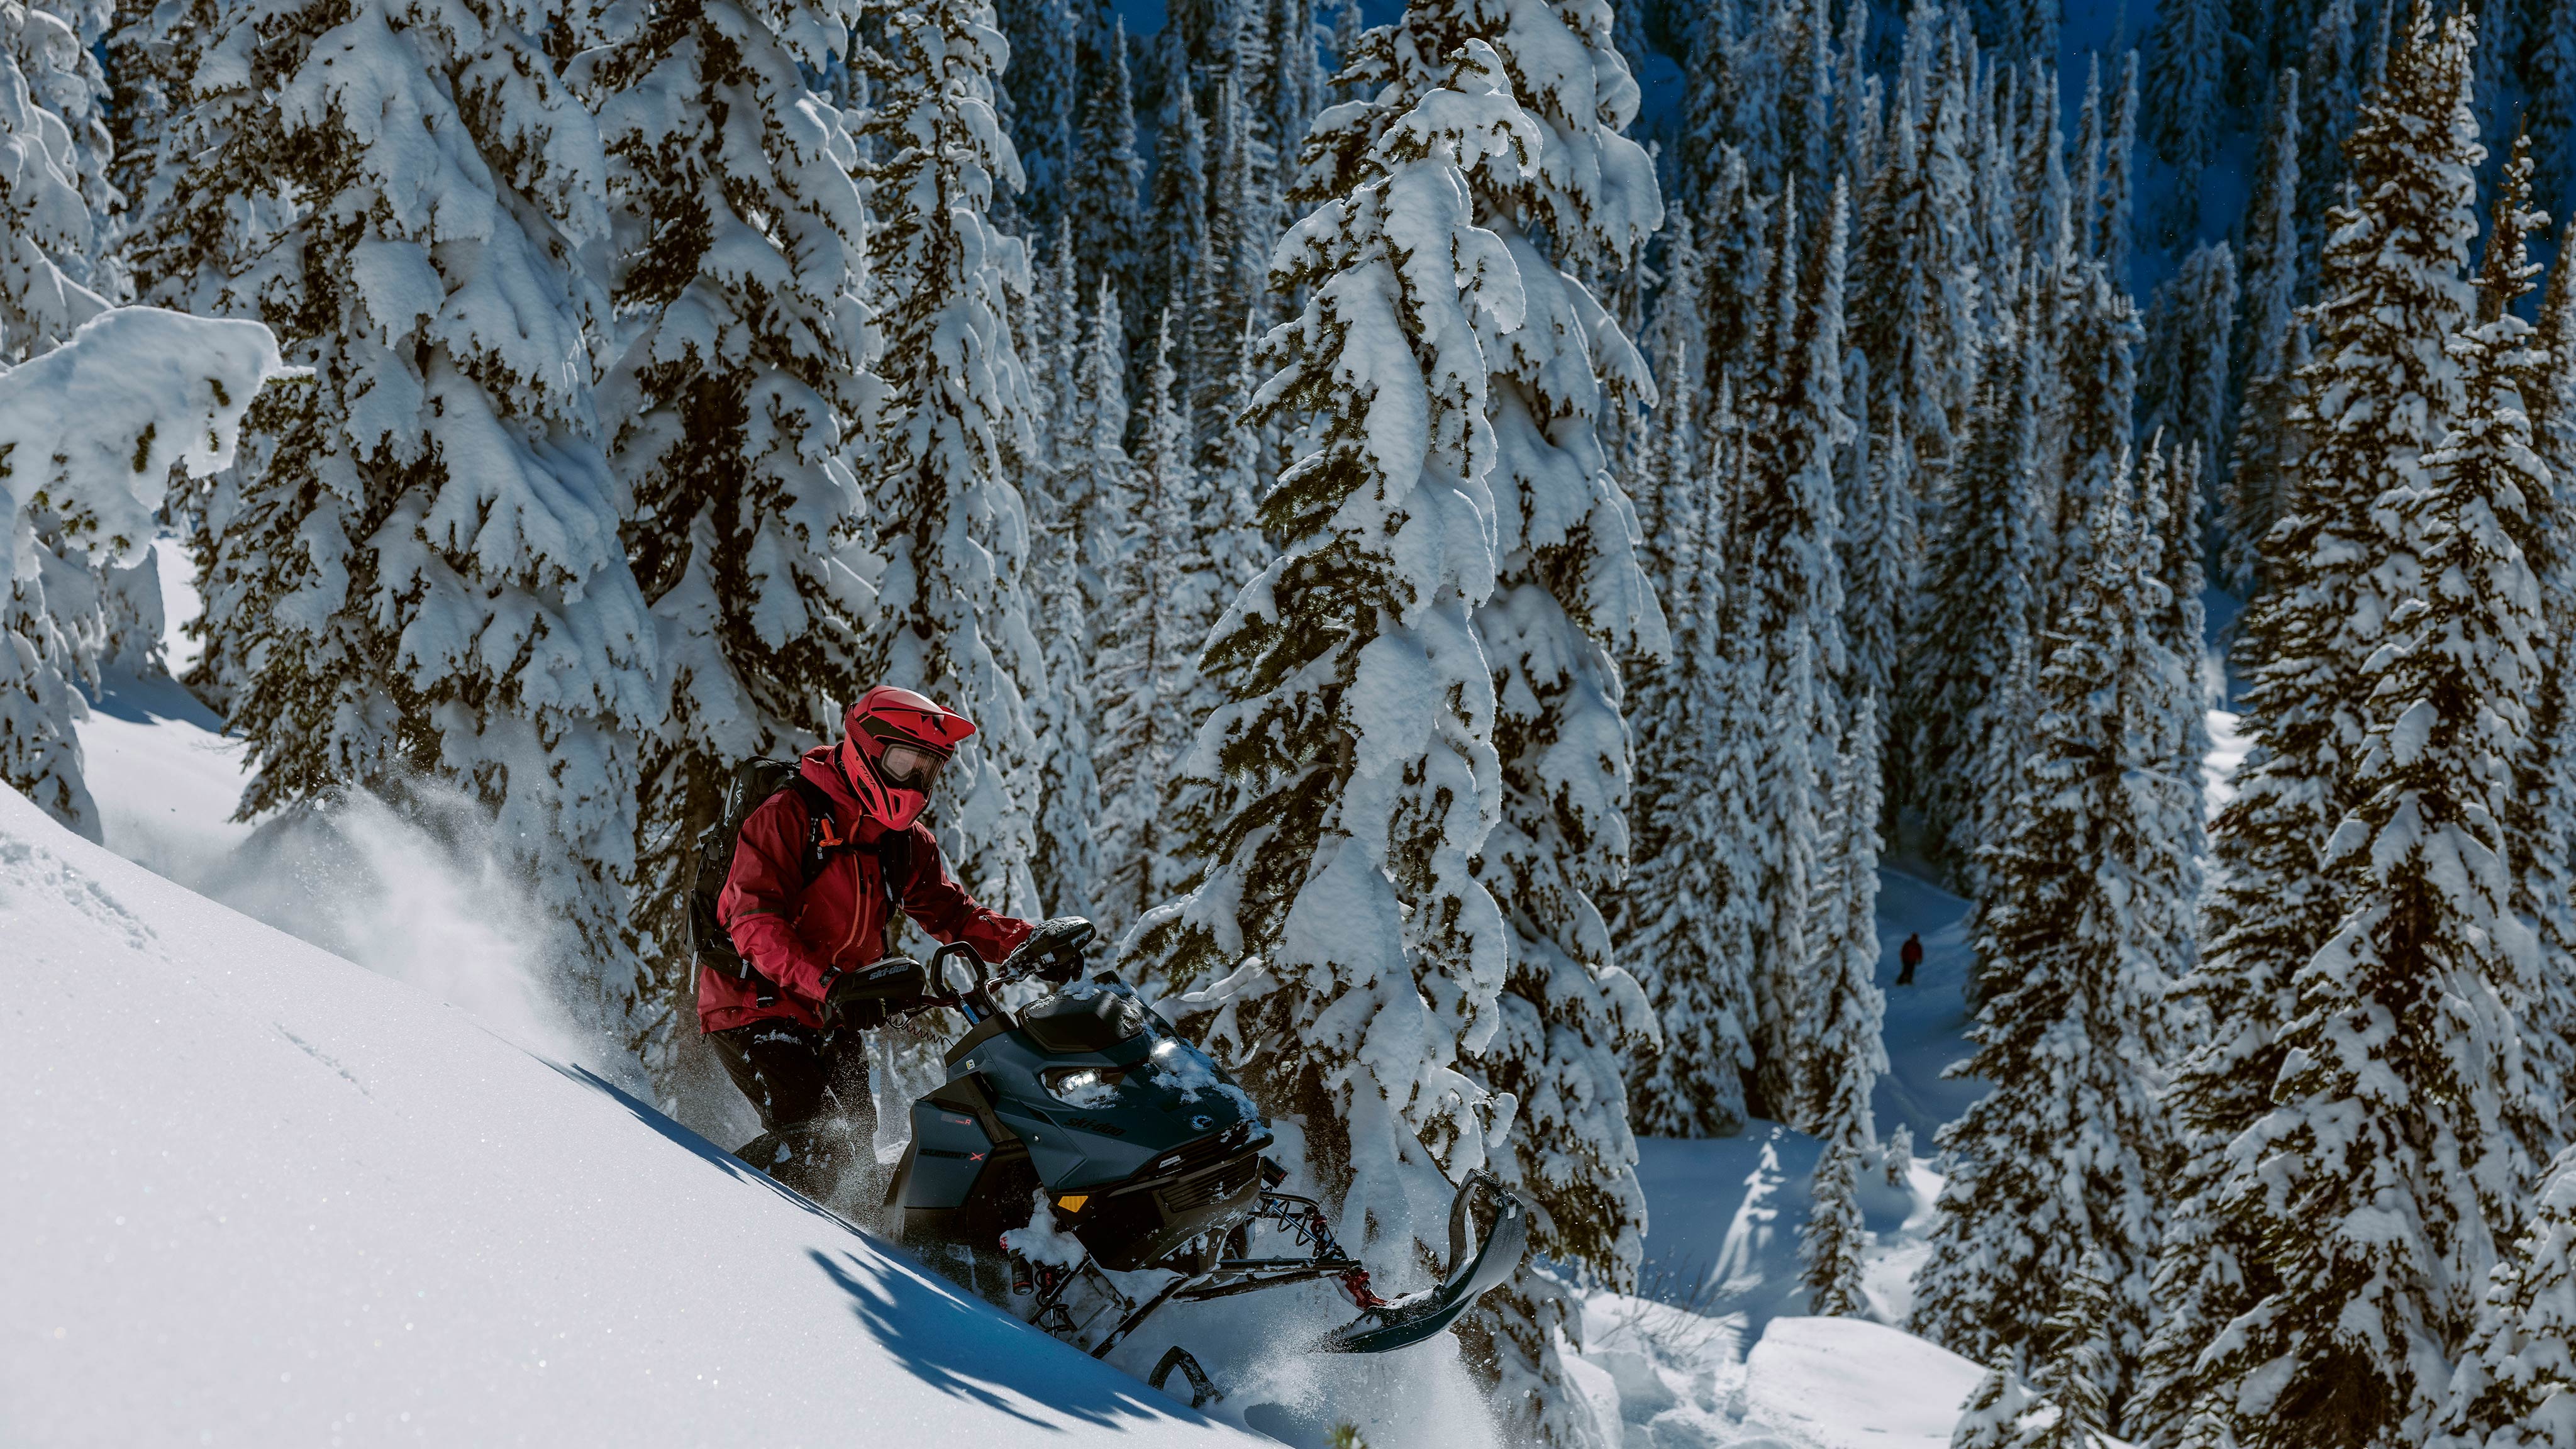 2025 Ski-Doo Summit snowmobile in a snowy forest